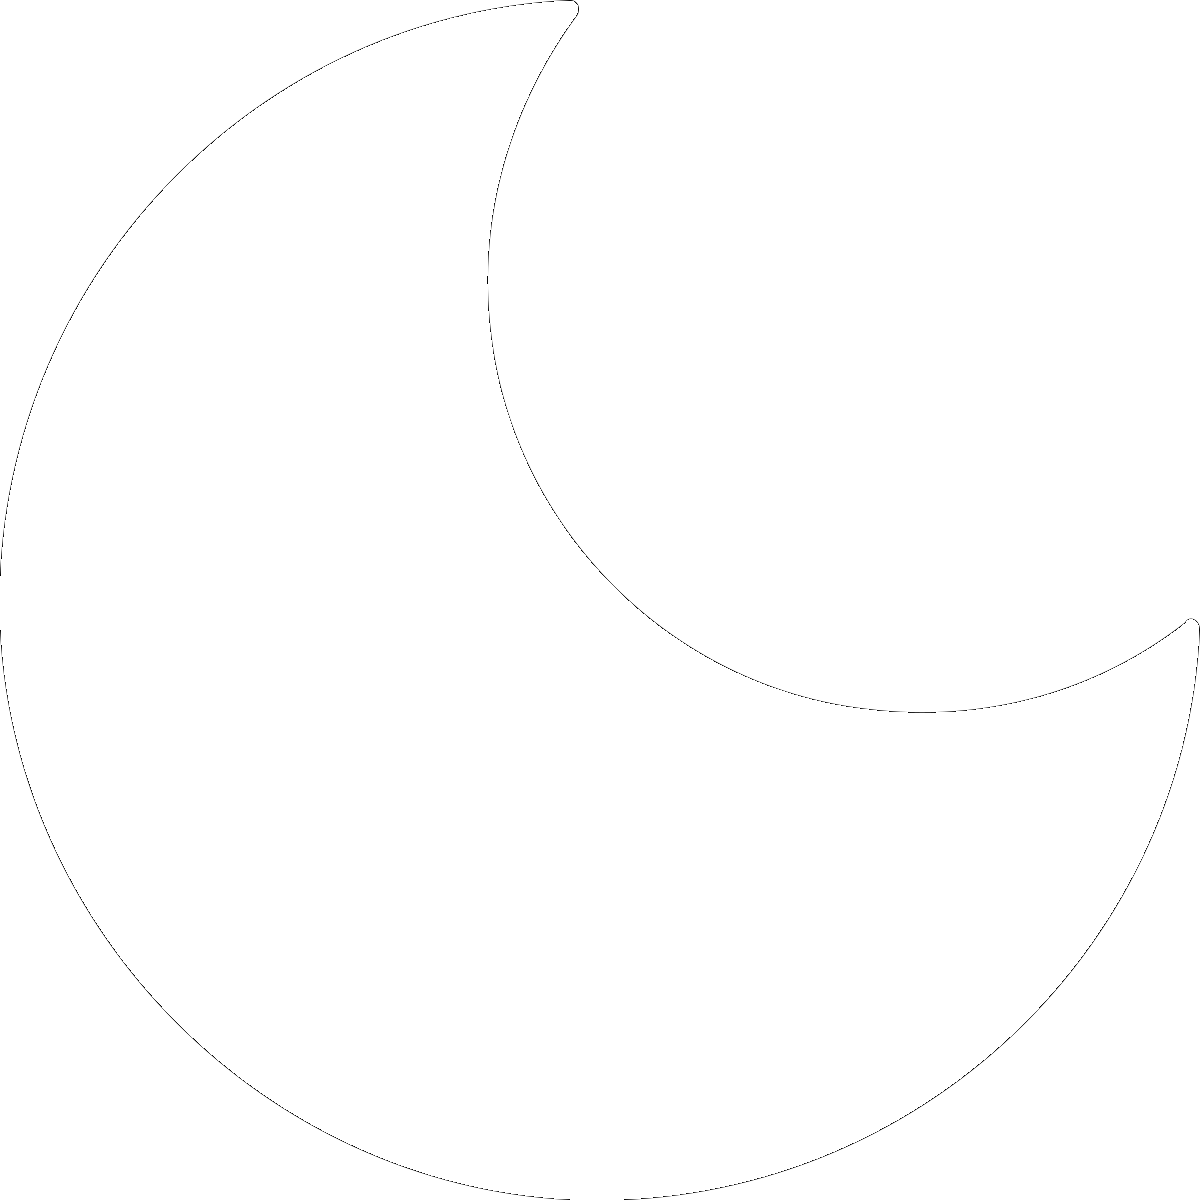 Symbol The Moon